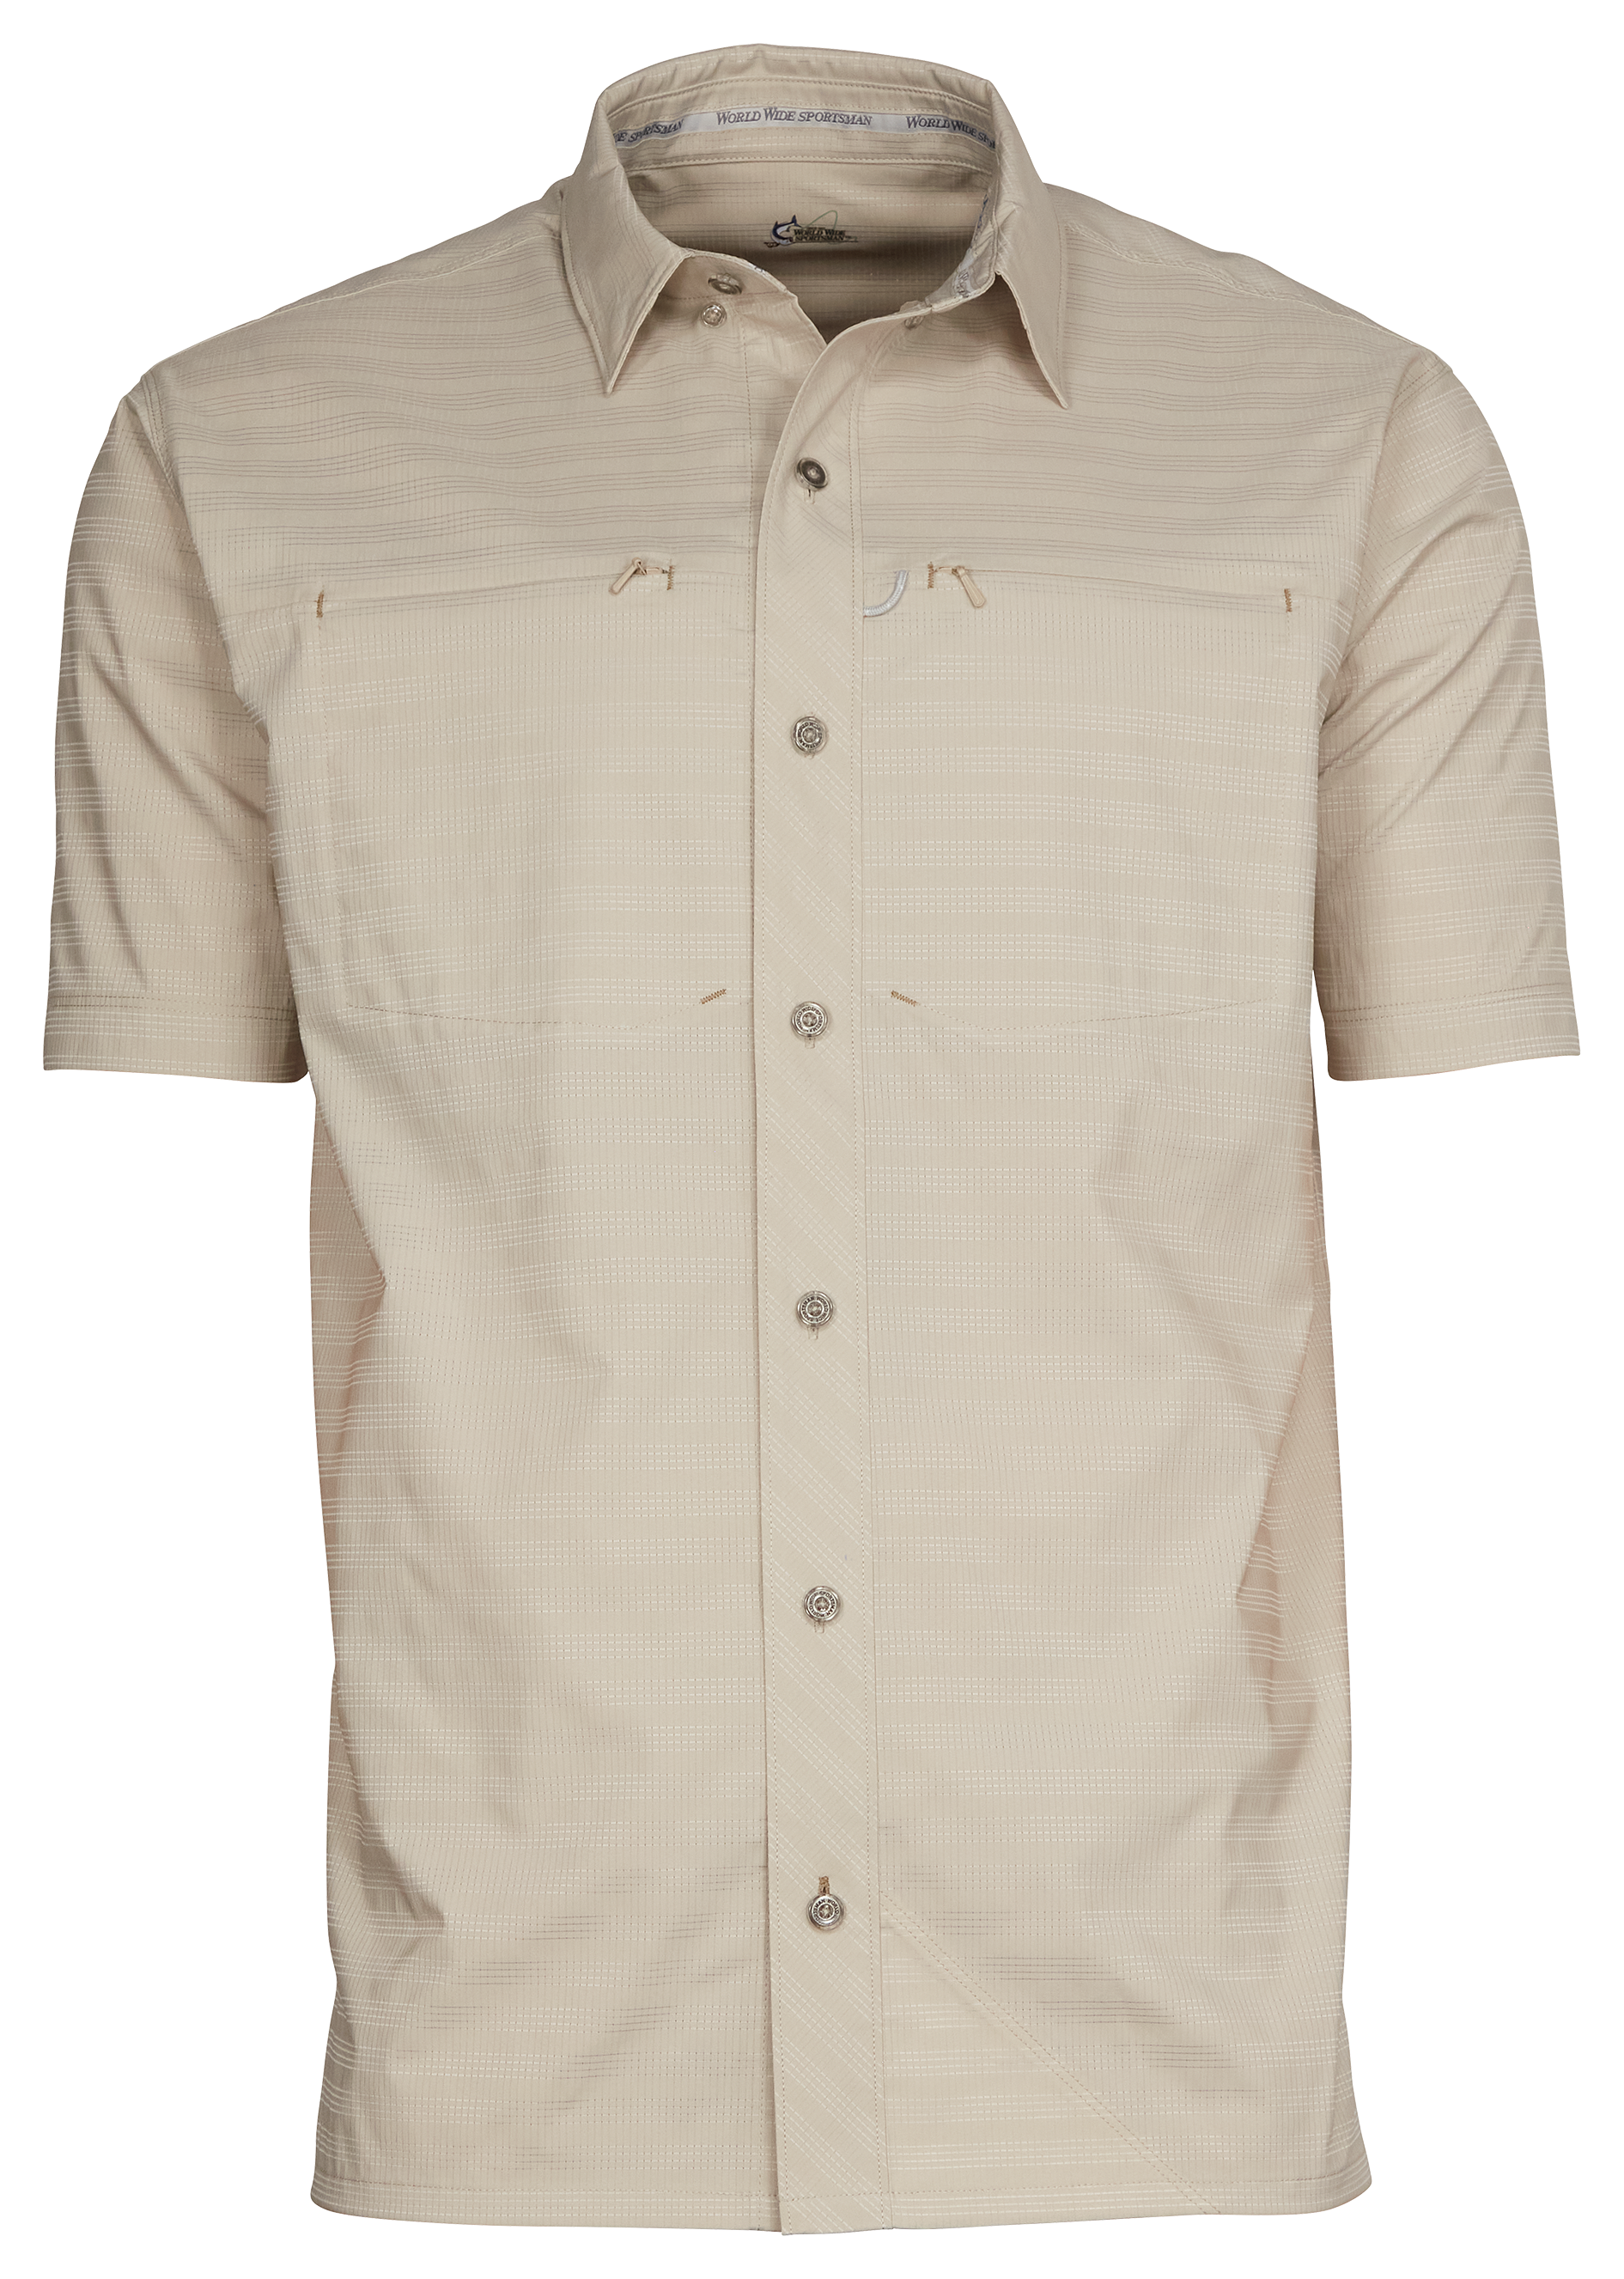 World Wide Sportsman Seacrest 2-Pocket Short-Sleeve Button-Down Shirt for Men - Peyote - L